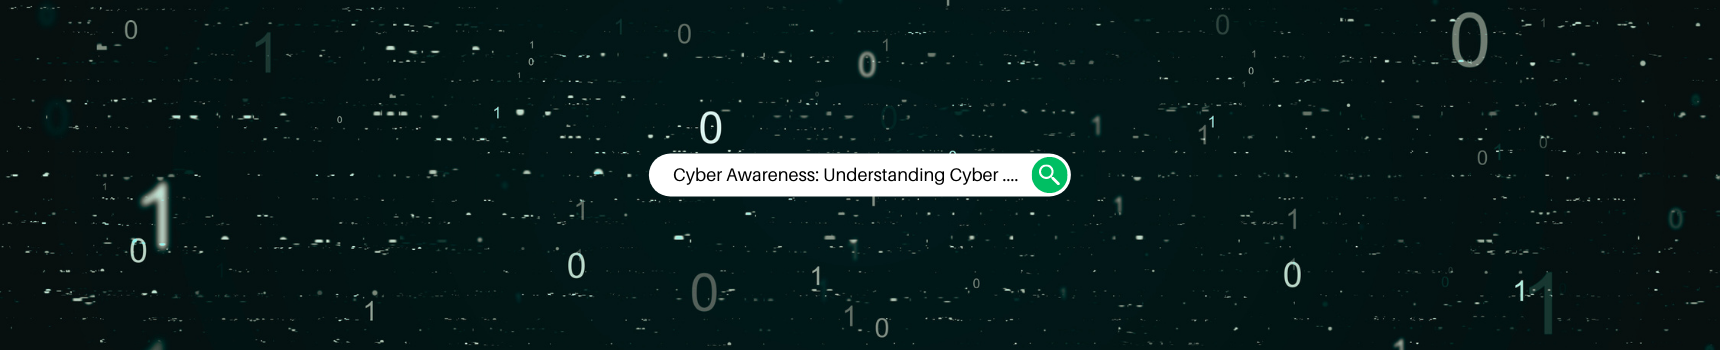 Cyber Awareness: Understanding Cyber Threats